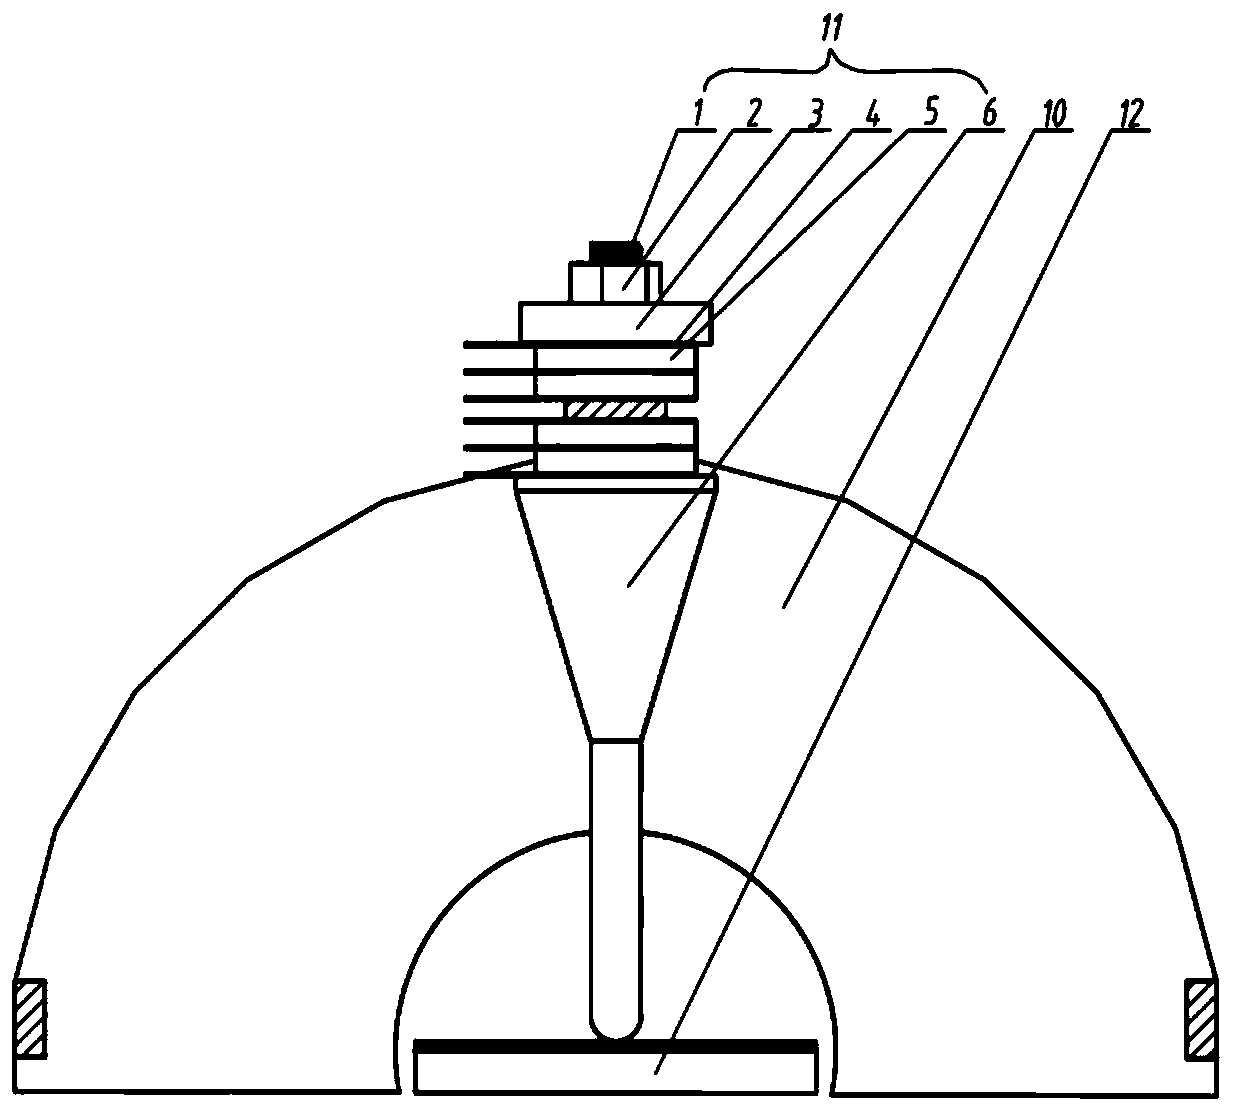 Variable-angle ultrasonic impact test device and method